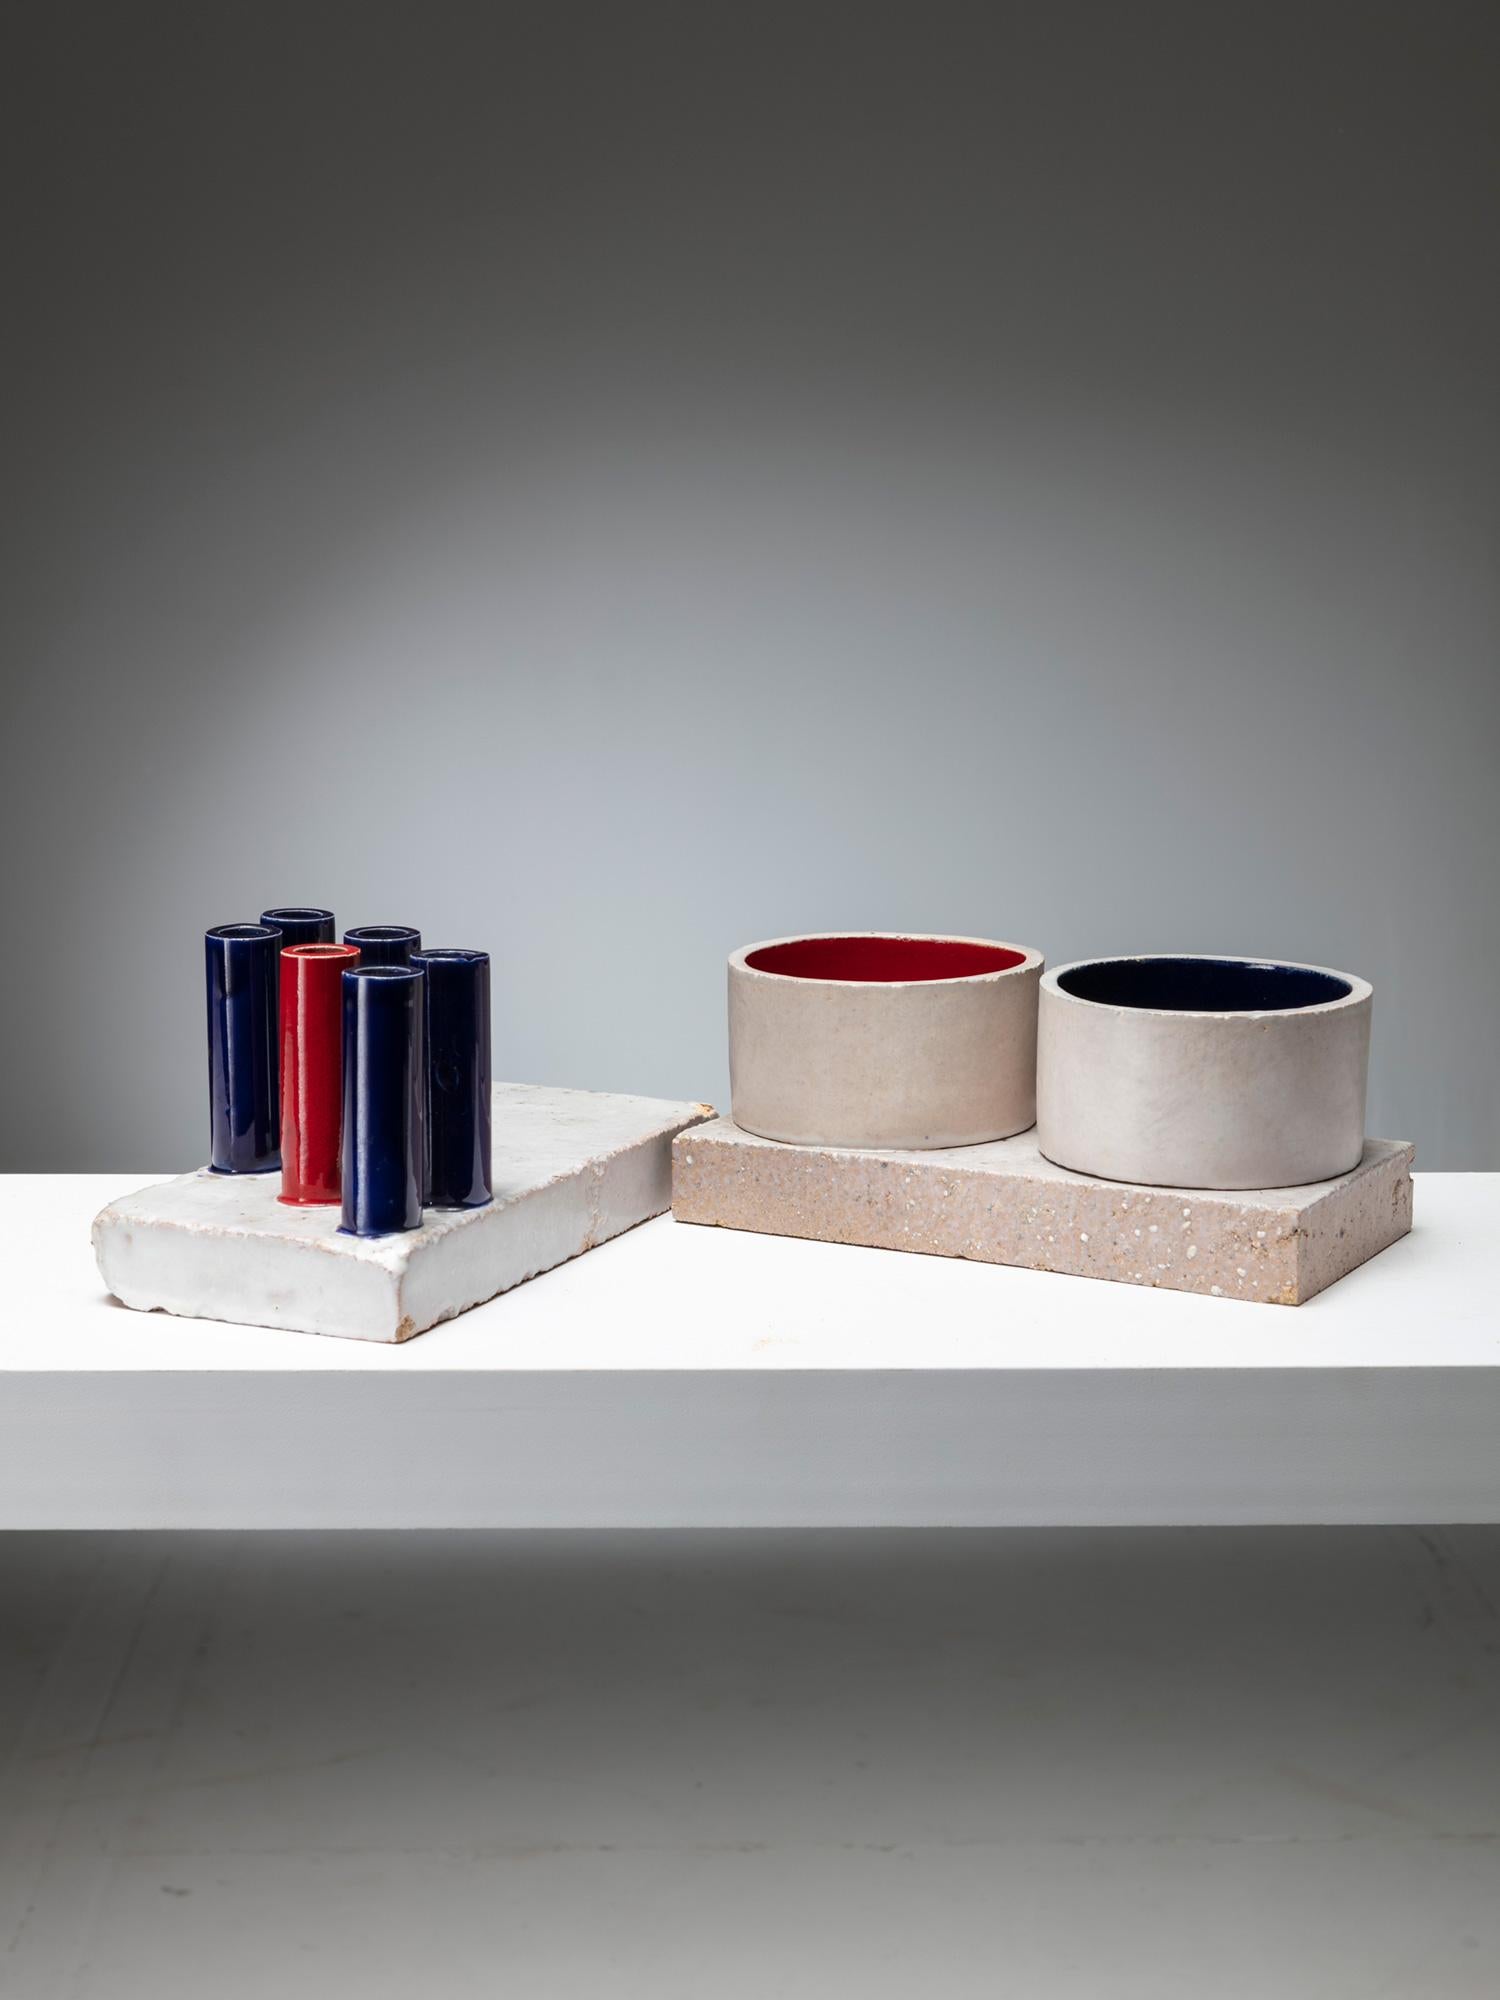 Three different Tubi/Tubi pieces by Ambrogio Pozzi for Ceramica Franco Pozzi.
Glazed ceramic blocks to be used autonomously or all together.